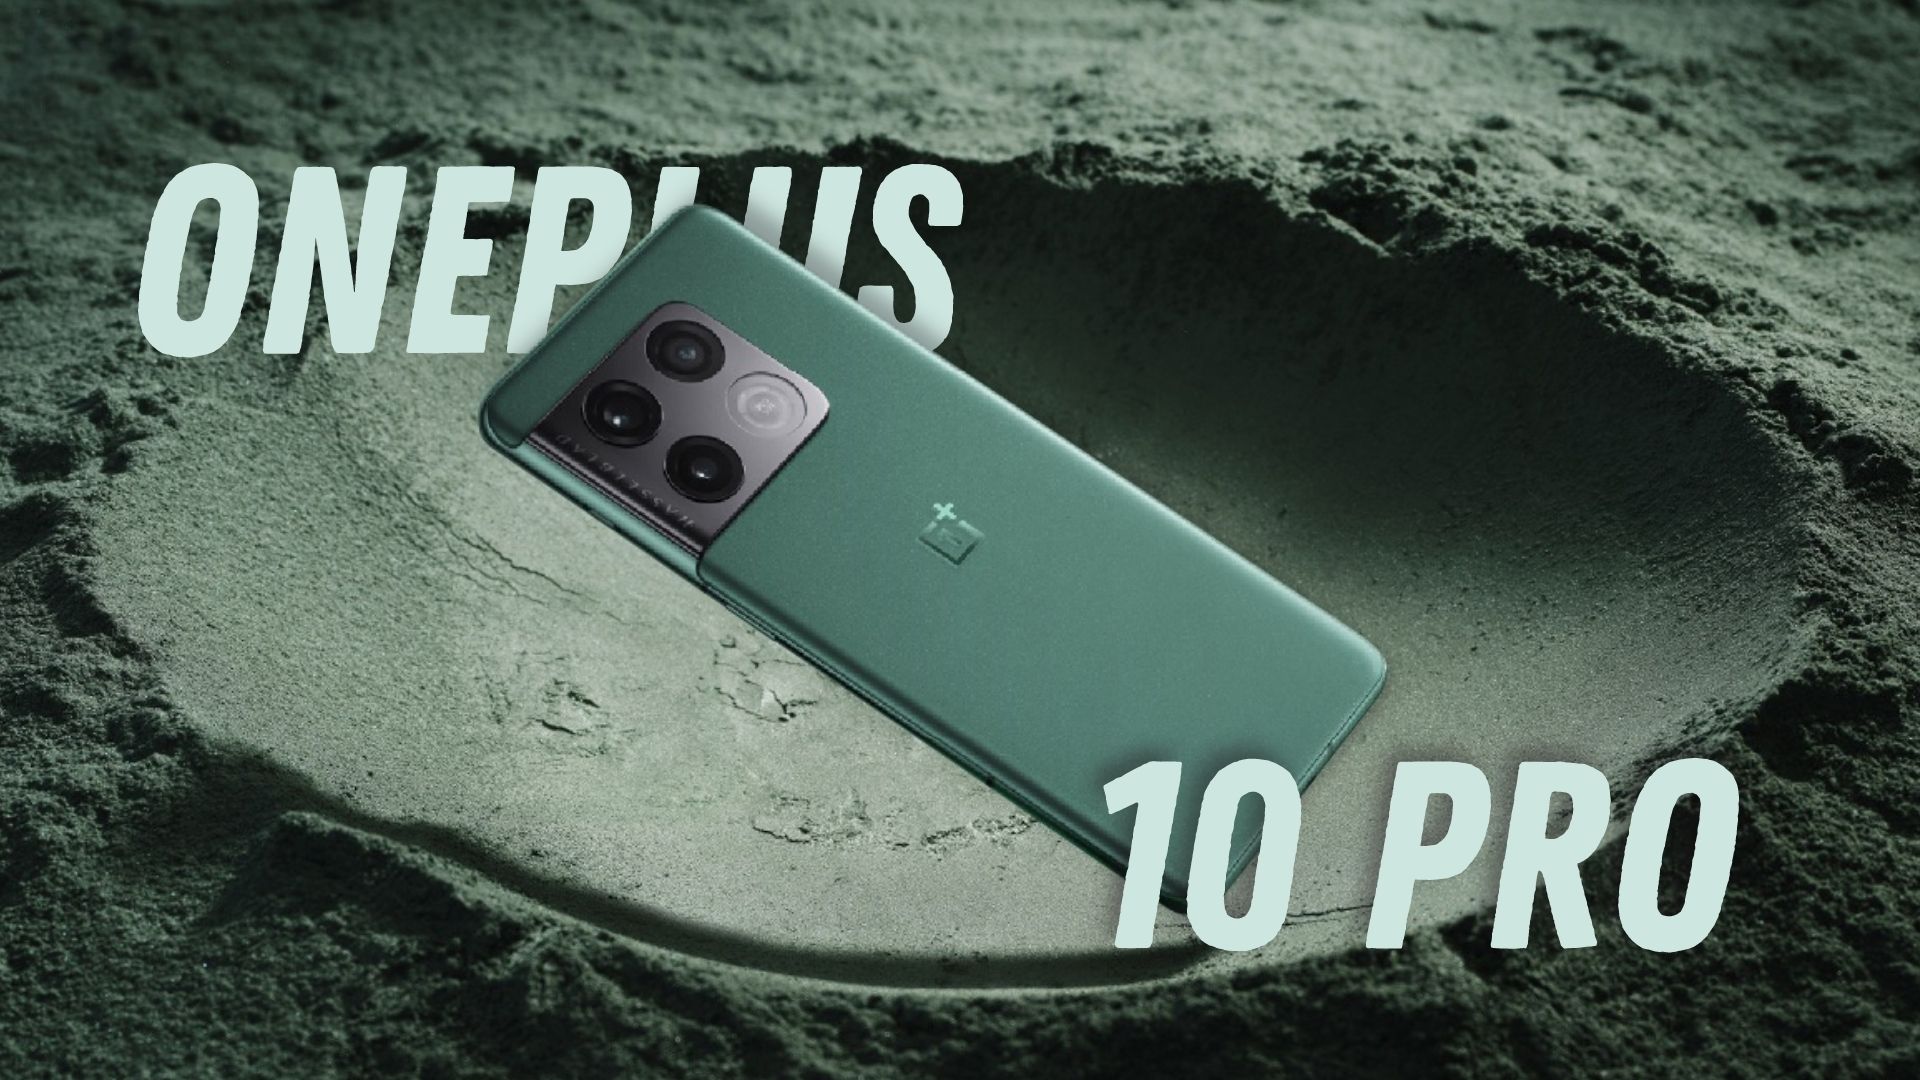 OnePlus 10 Pro design specs revealed 80W Fast Charging, Snapdragon 8 Gen 1 SoC